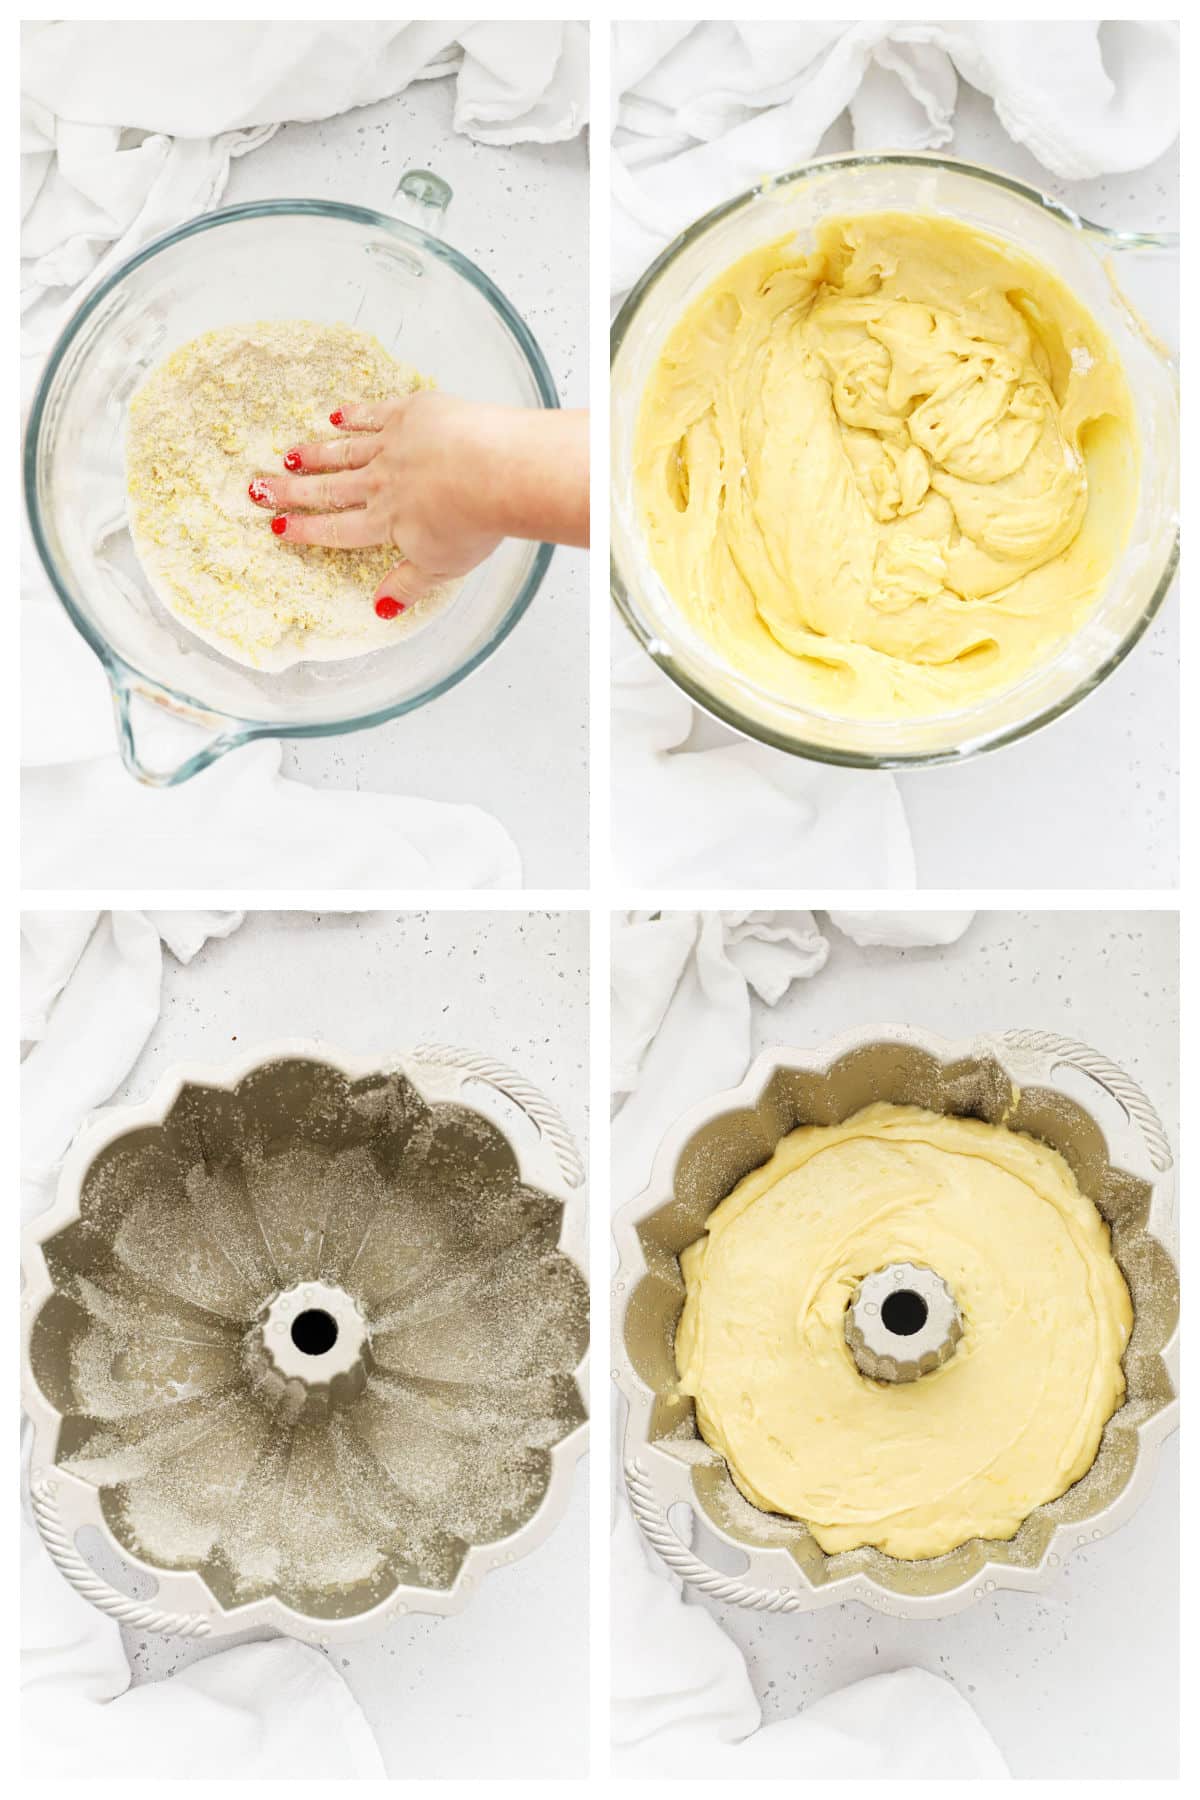 Making gluten-free lemon bundt cake step by step